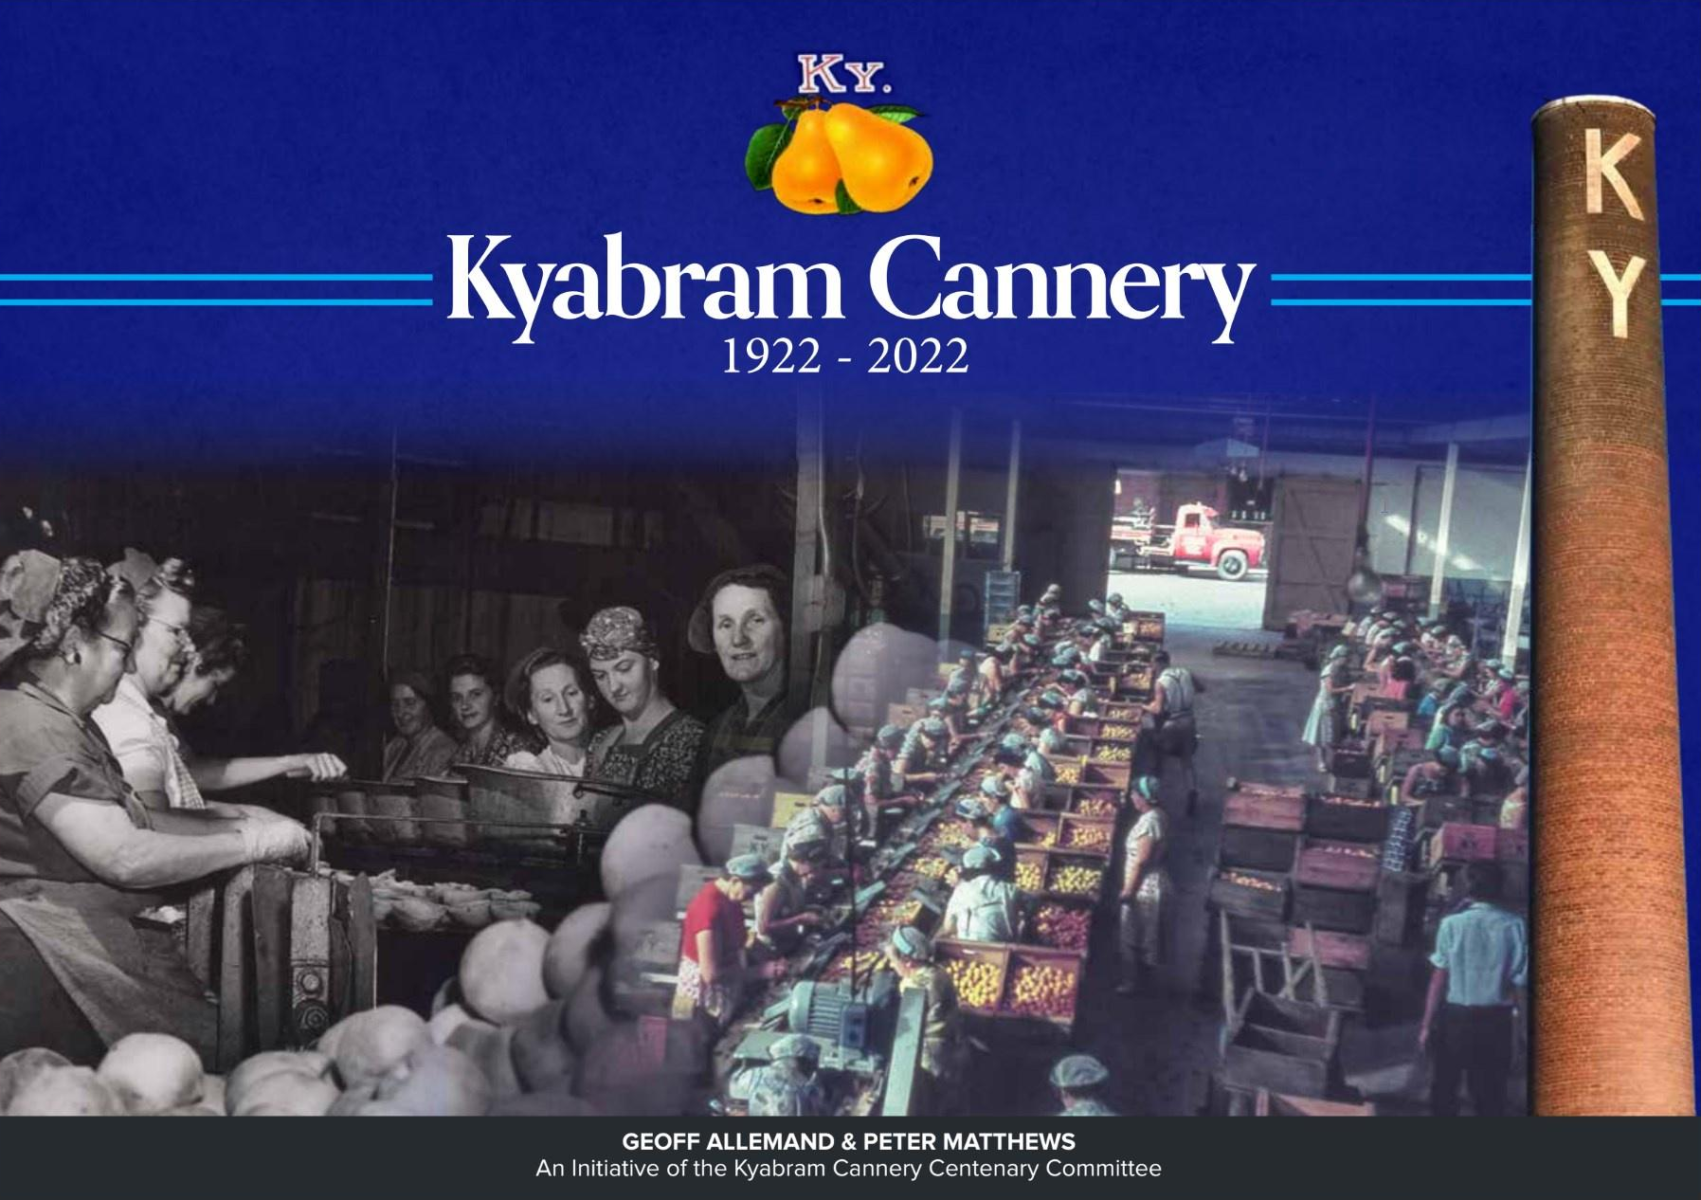 Kyabram Cannery 1922 - 2022